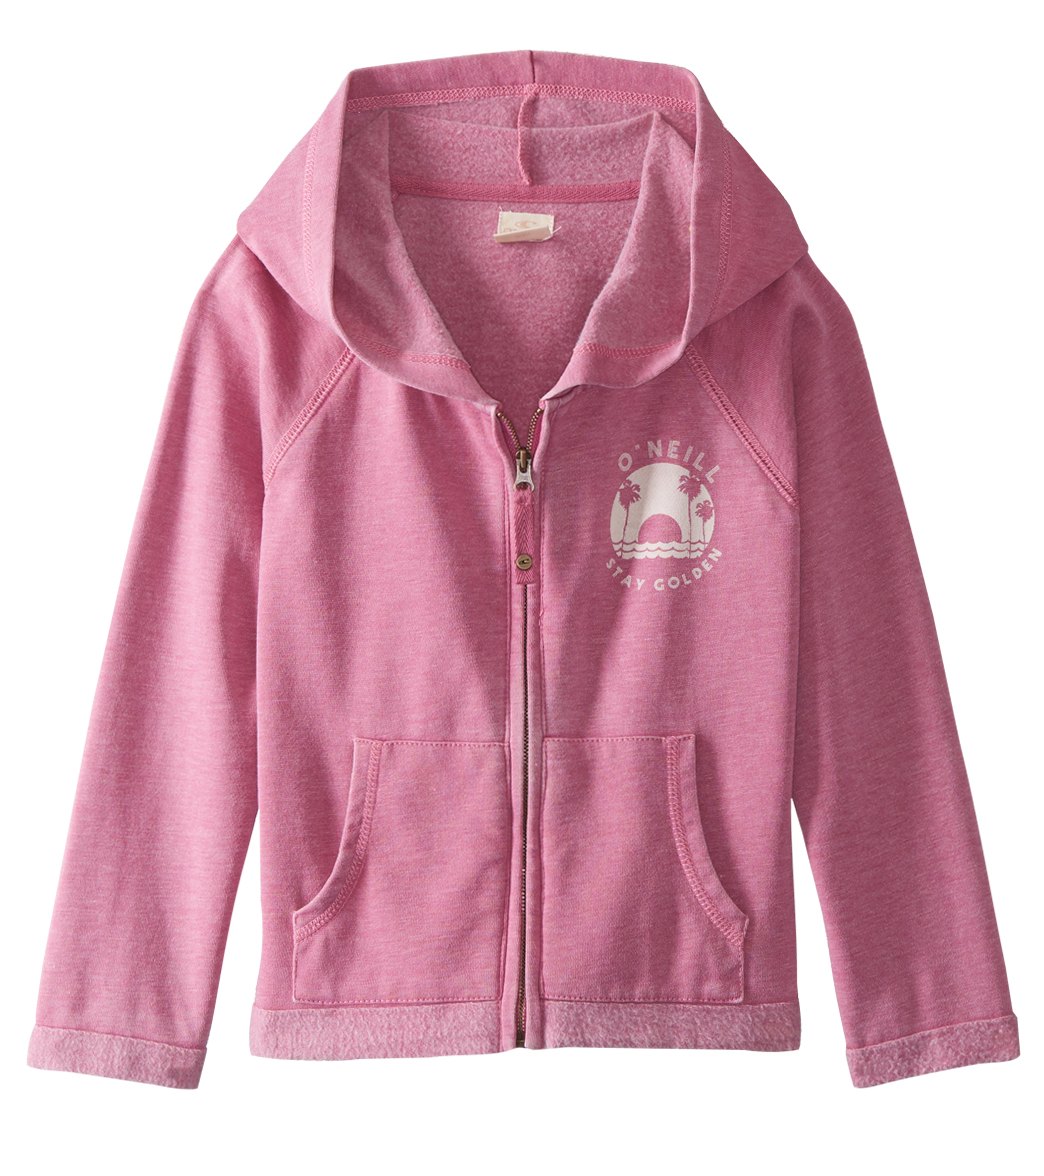 O'neill Girls' Coastline Zip Up Fleece Jacket Toddler Kid - Purple 5 Cotton/Polyester - Swimoutlet.com